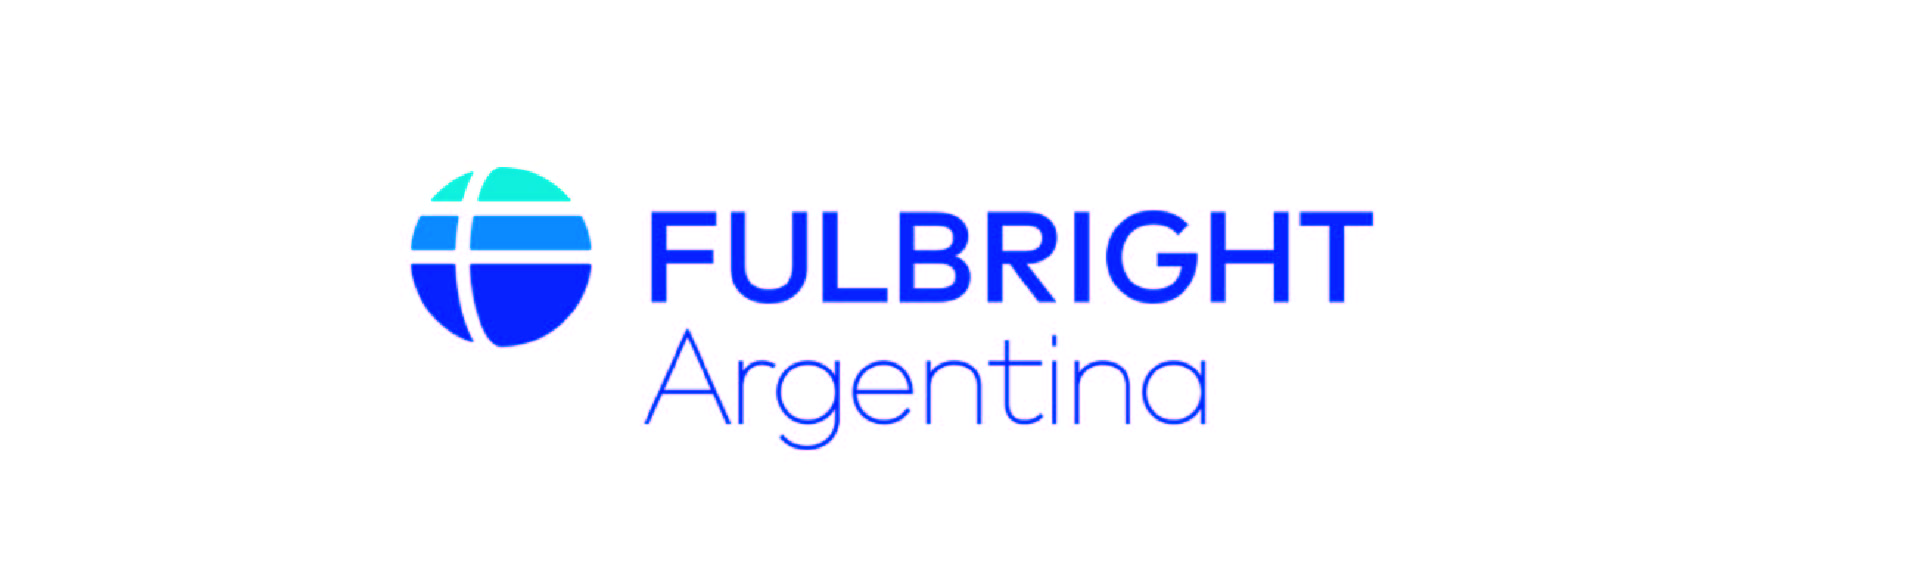 Webinar sobre la convocatoria “Becas Friends of Fulbright” - UNPAZ